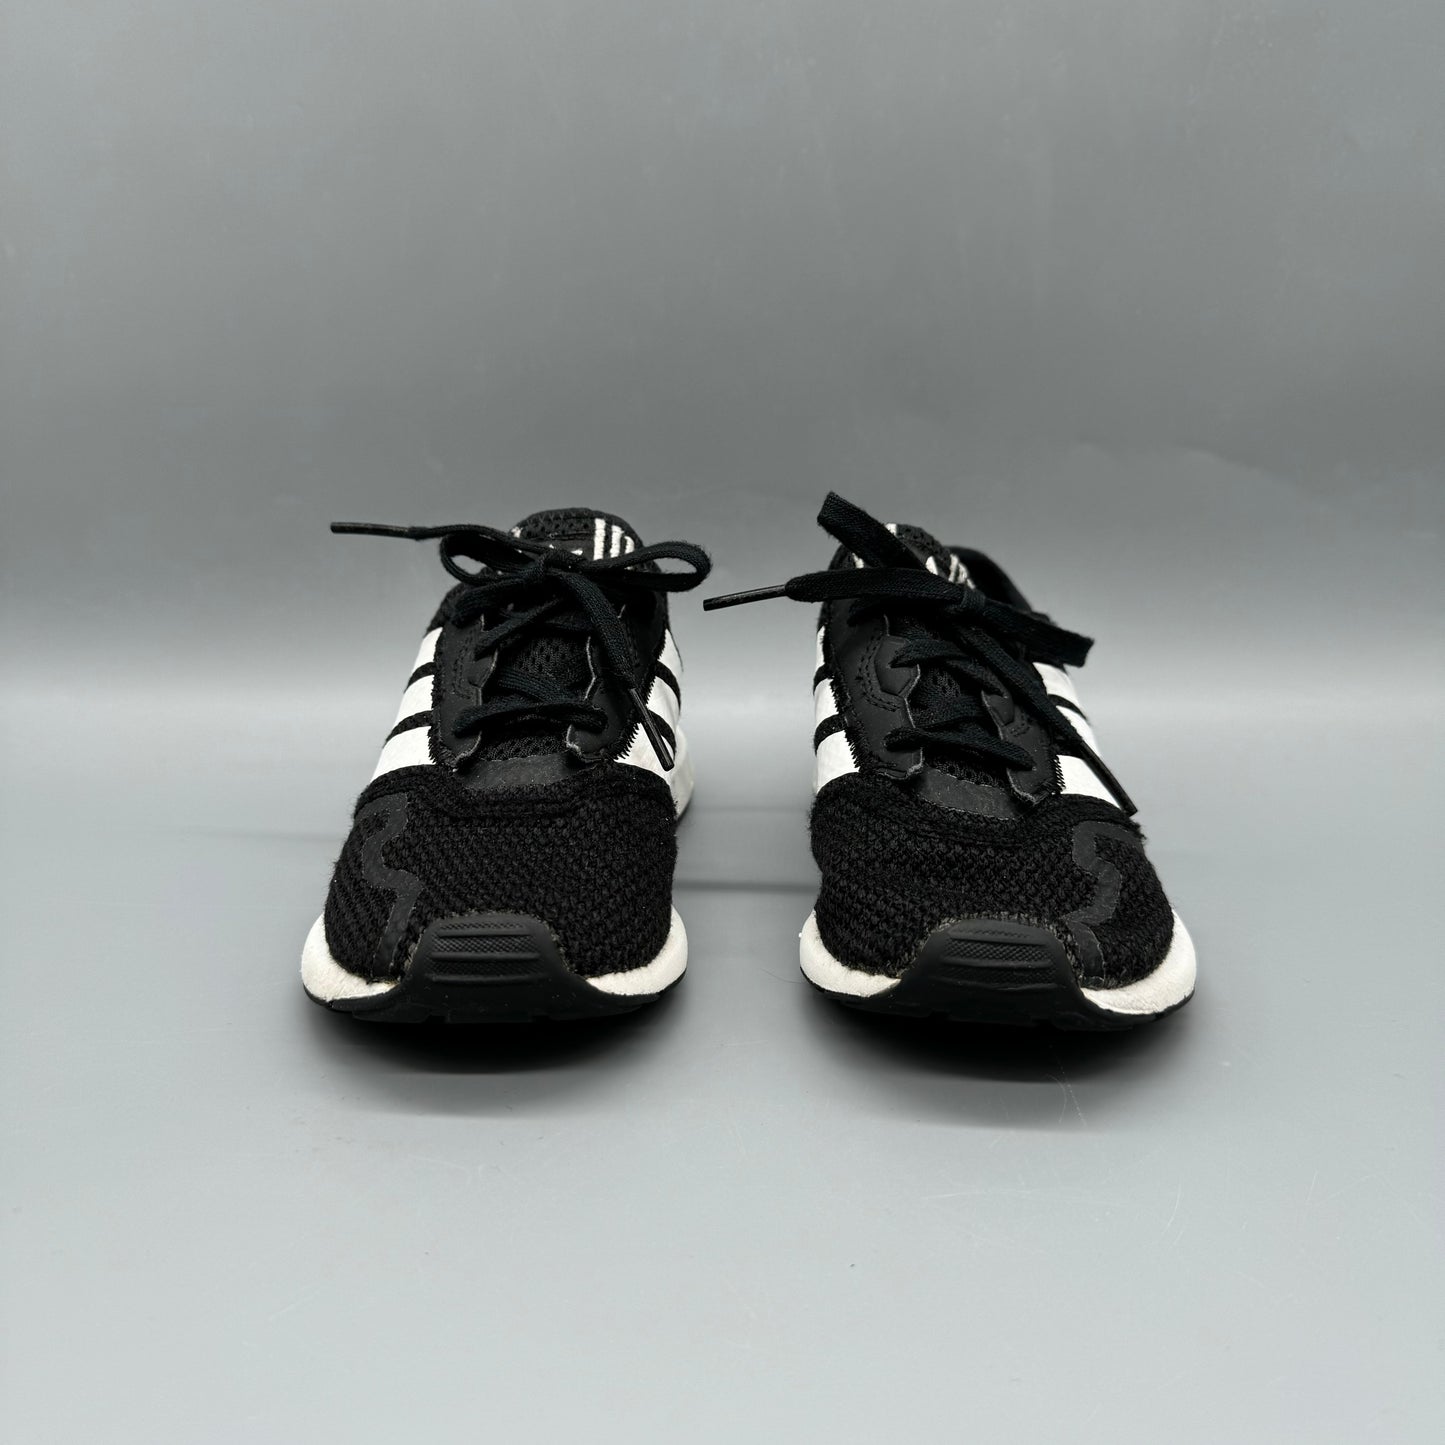 Adidas / Runner / US10